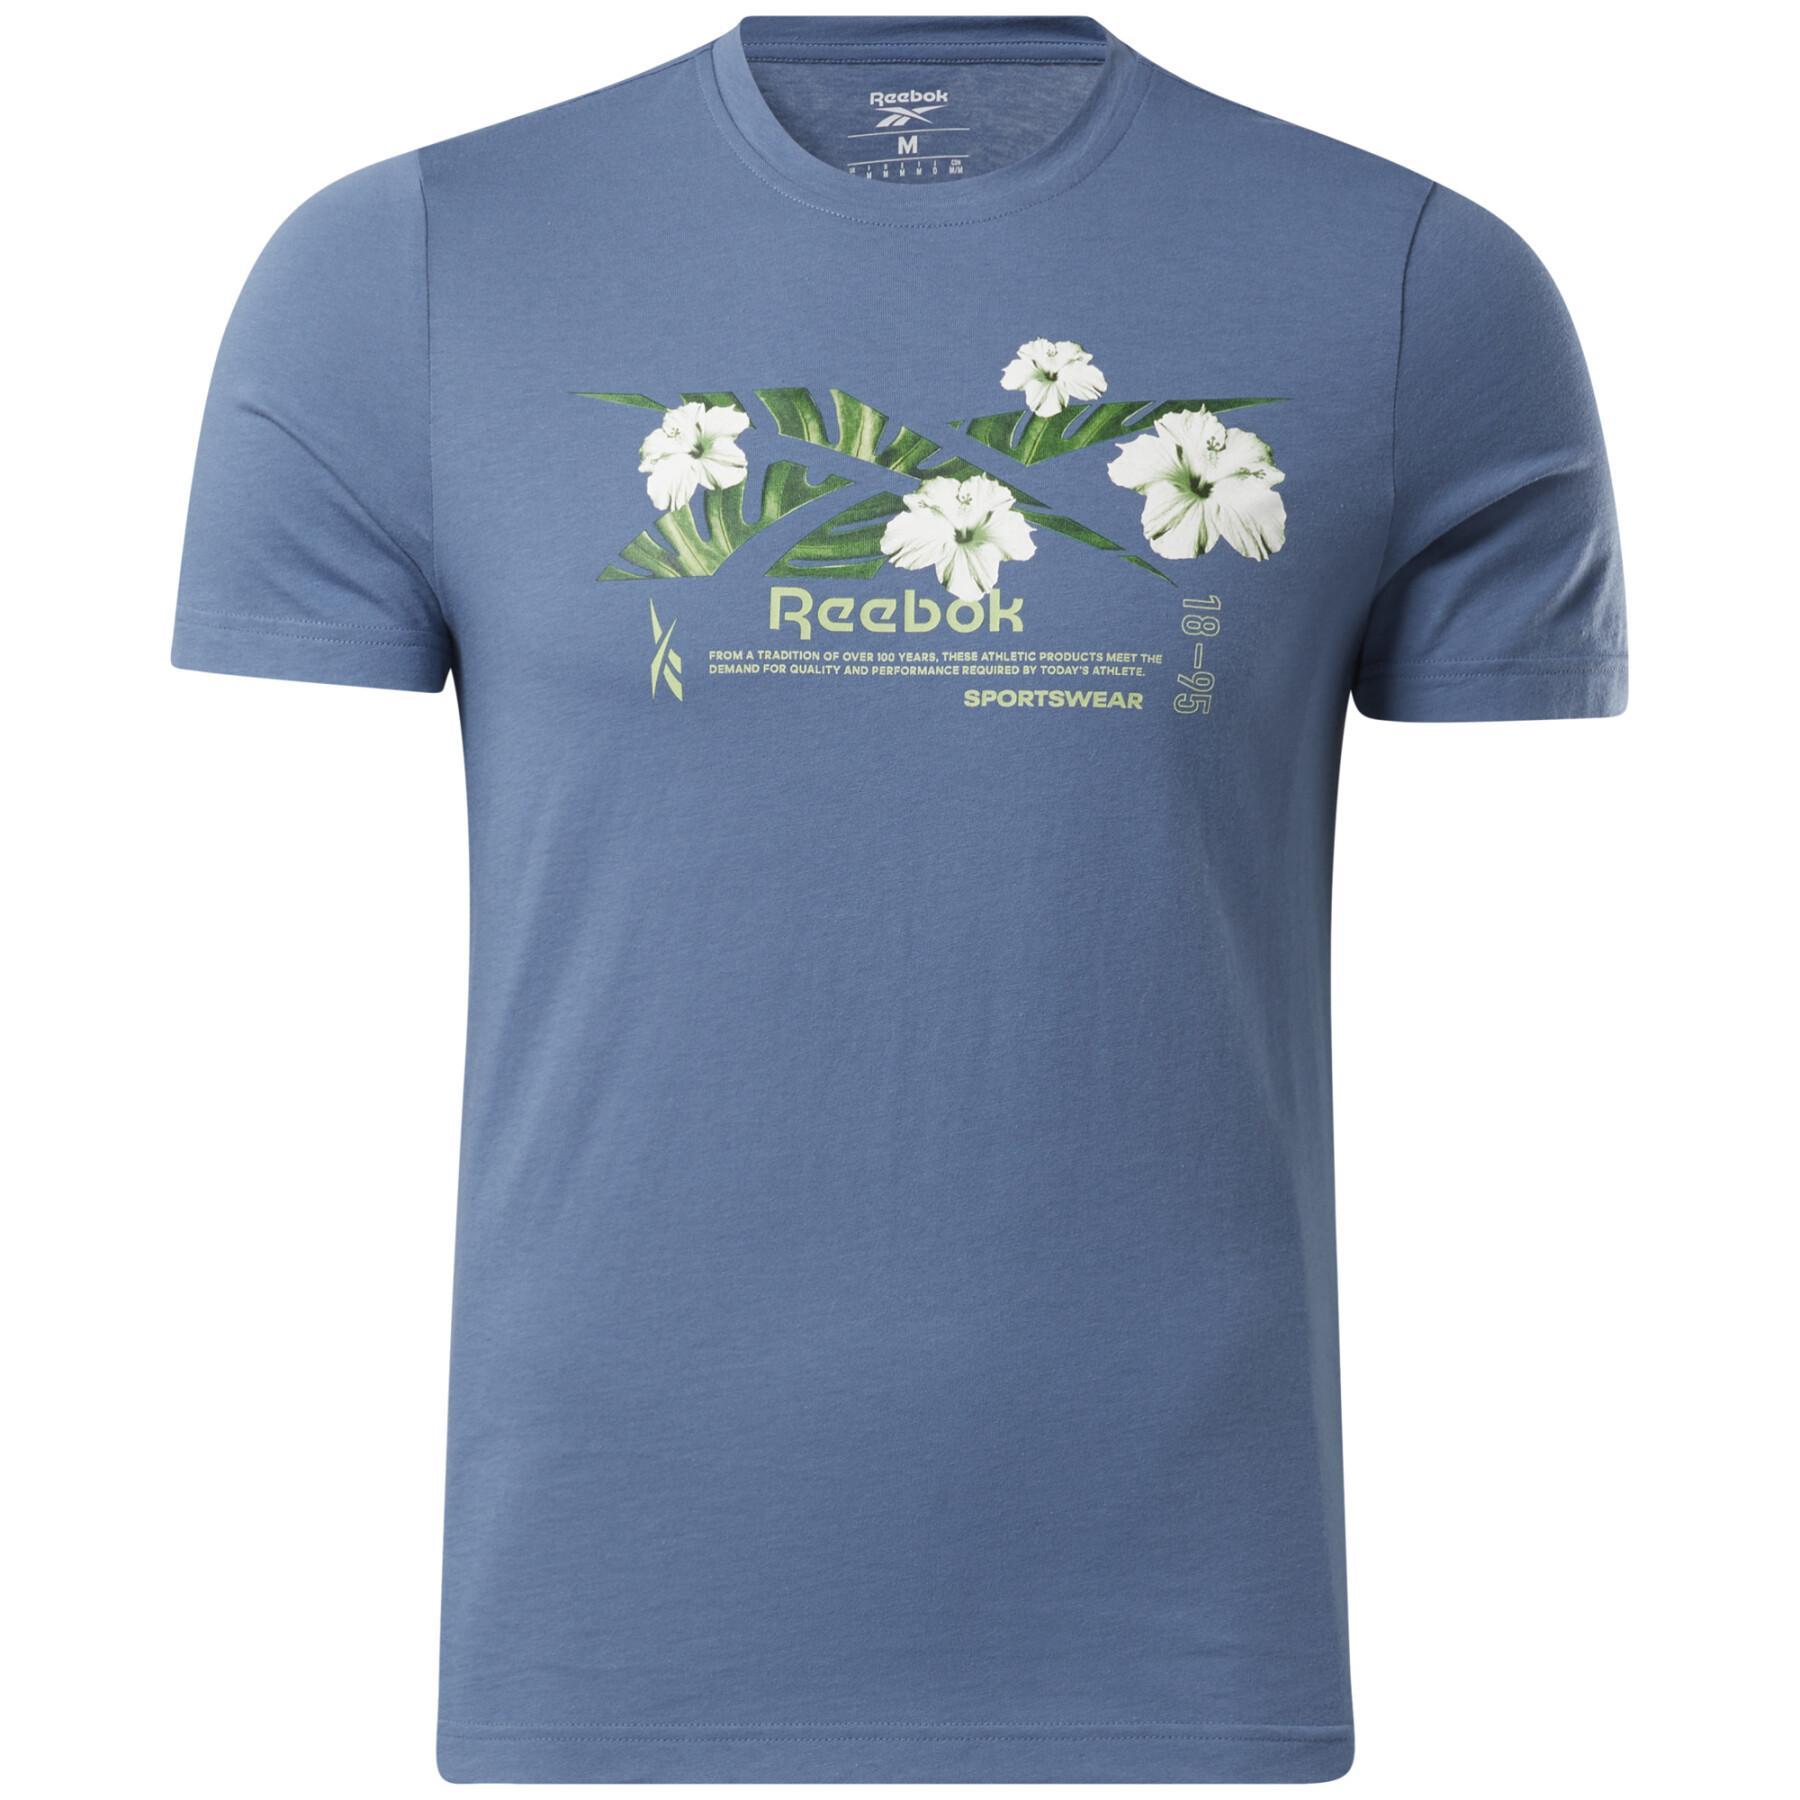 T-shirt Reebok Graphic Series Vector Flower